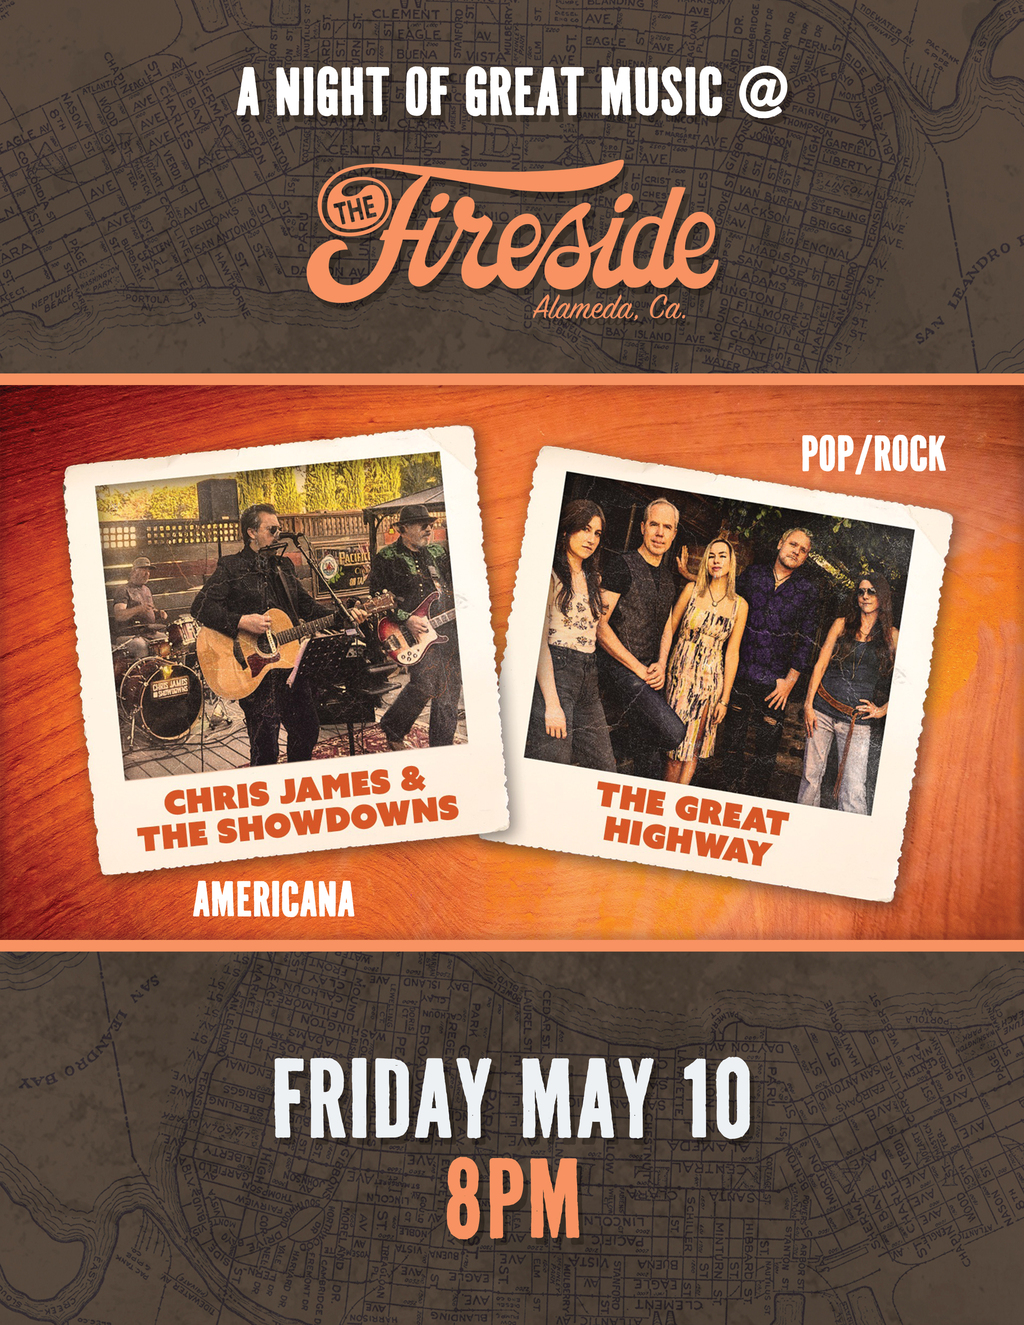 The Fireside Lounge A Night of Great Music   Fireside Alameda  CA promotion flier on Digifli com